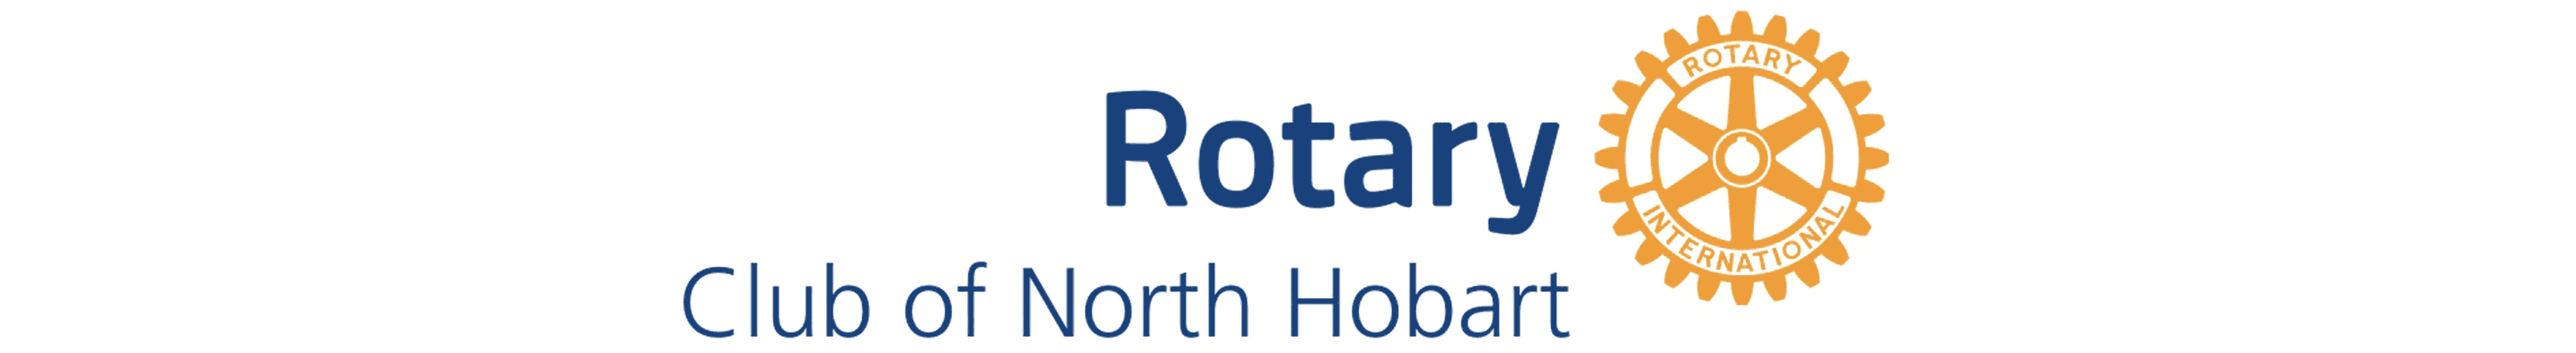 Rotary opens many doors - Rotary Club of North Hobart